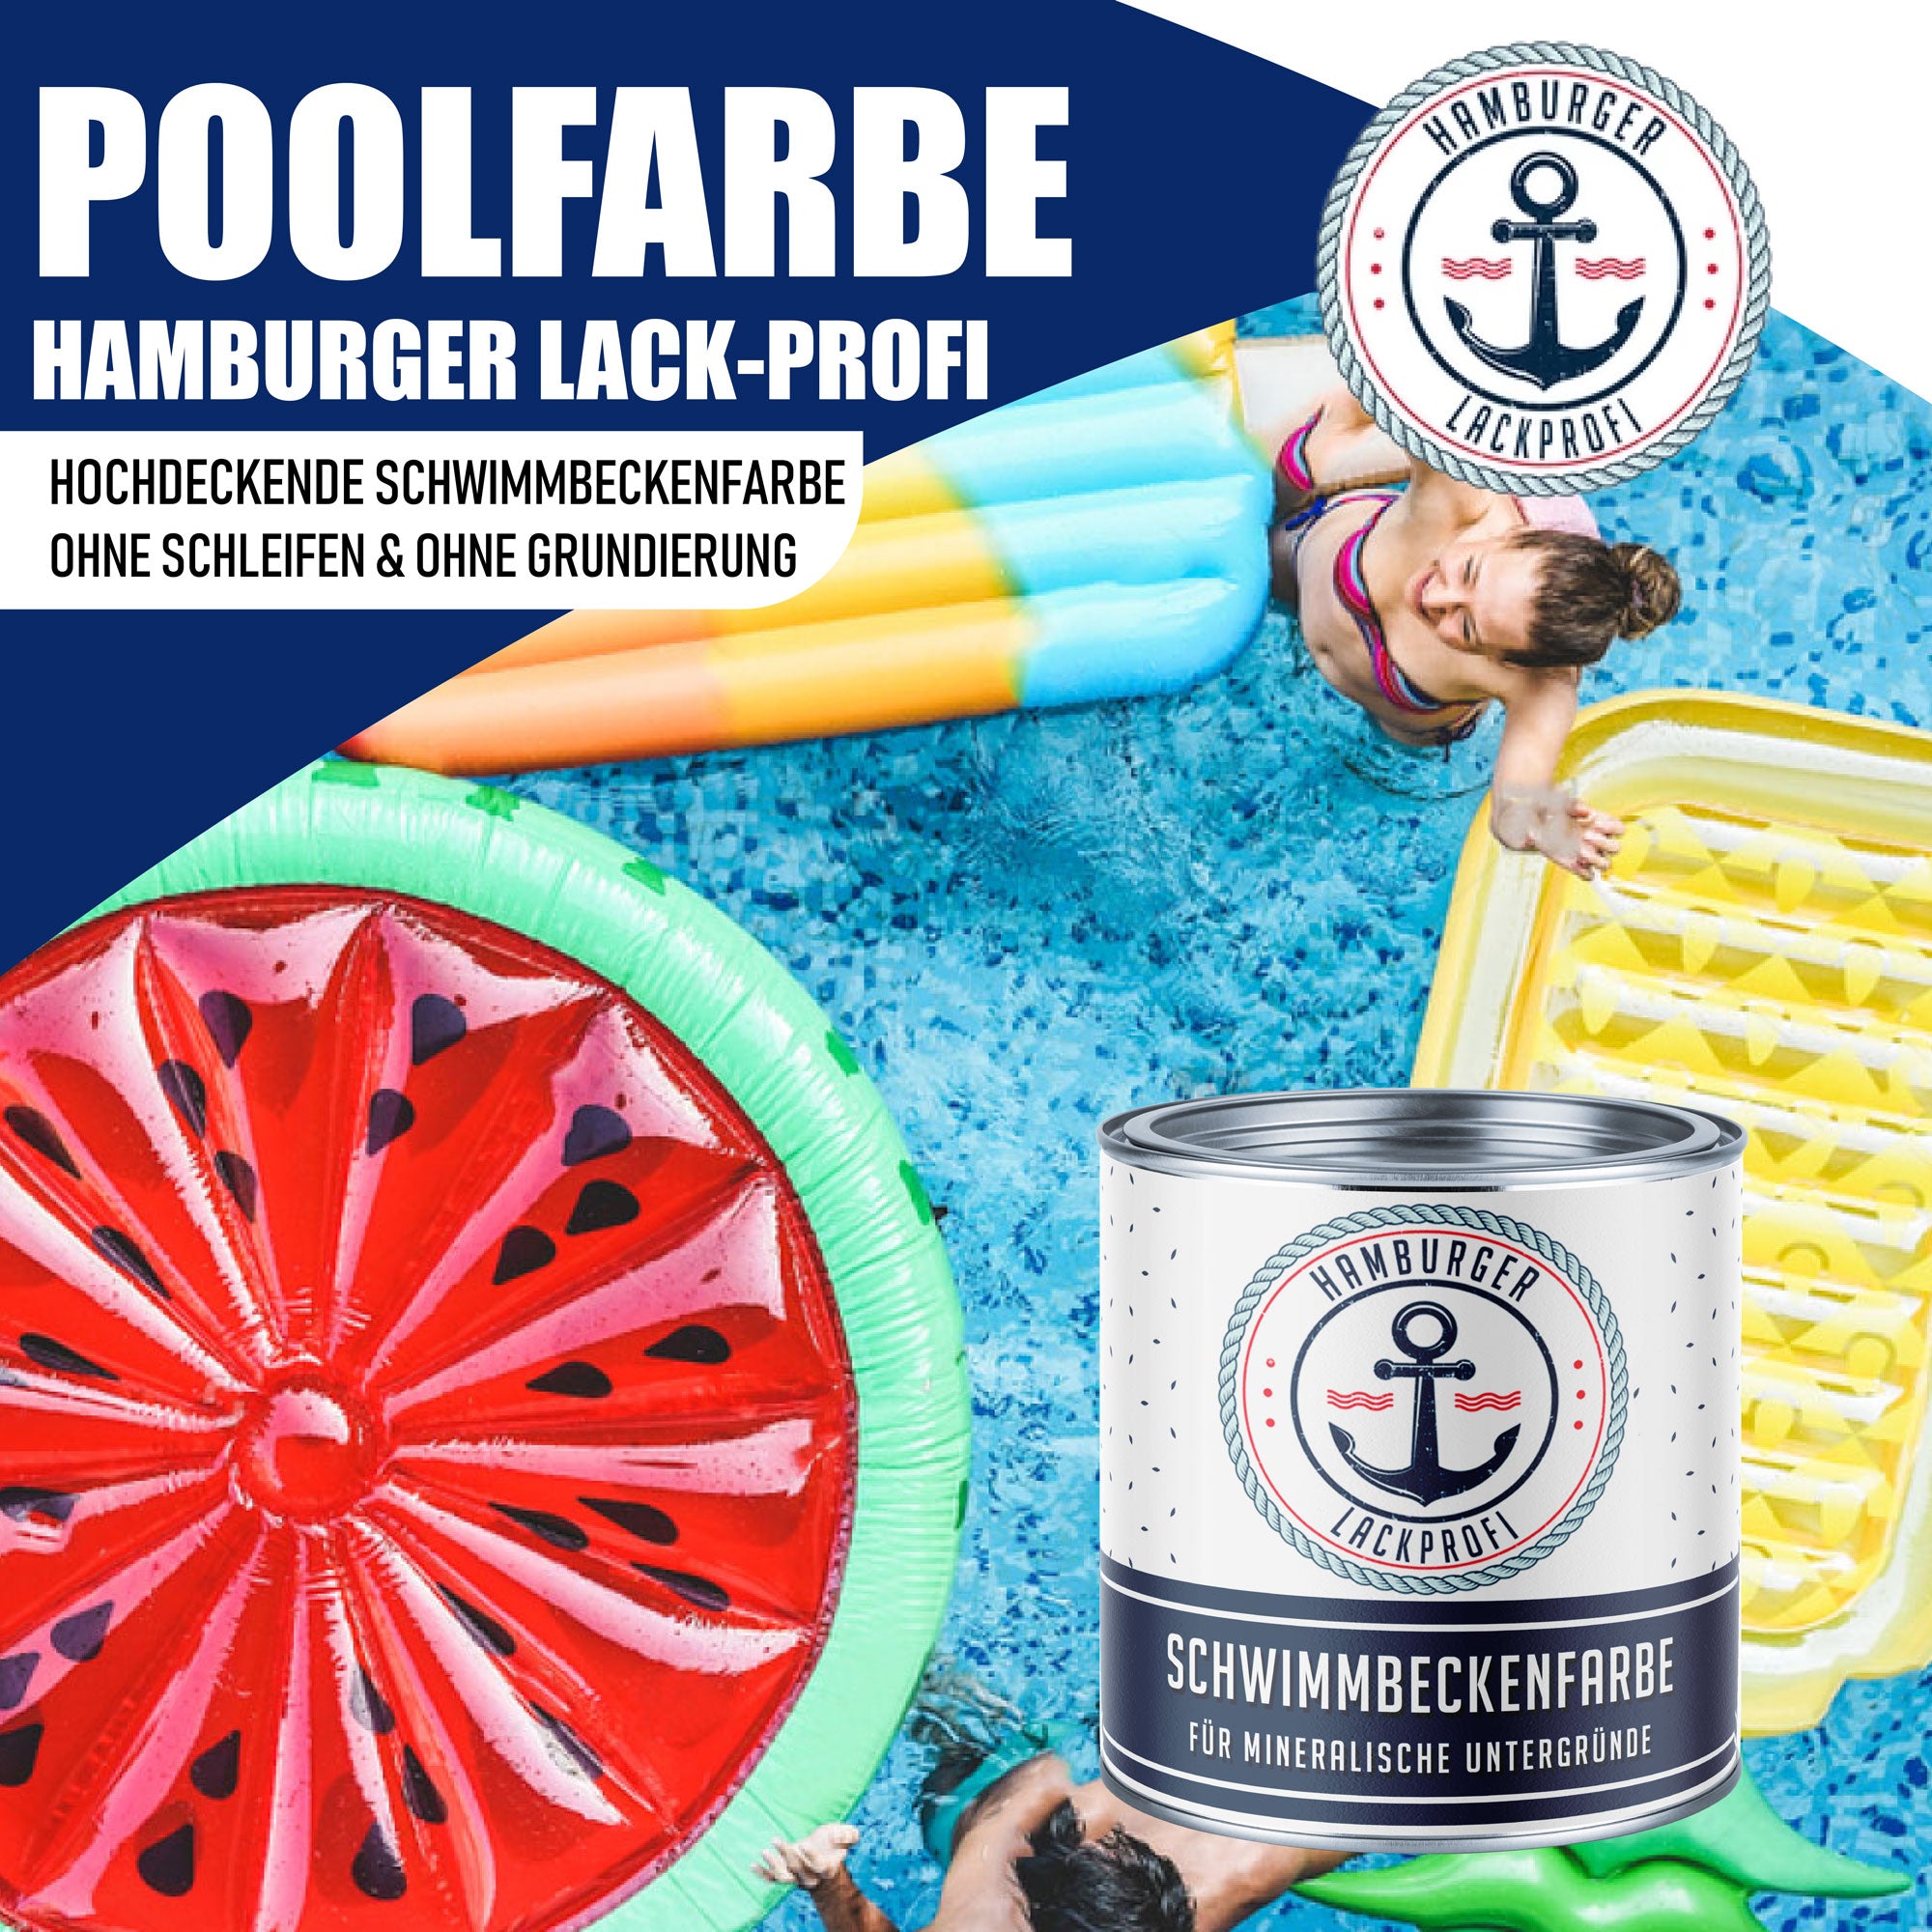 Hamburger Lack-Profi Schwimmbeckenfarbe Saphirblau RAL 5003 - hochdeckende Poolfarbe